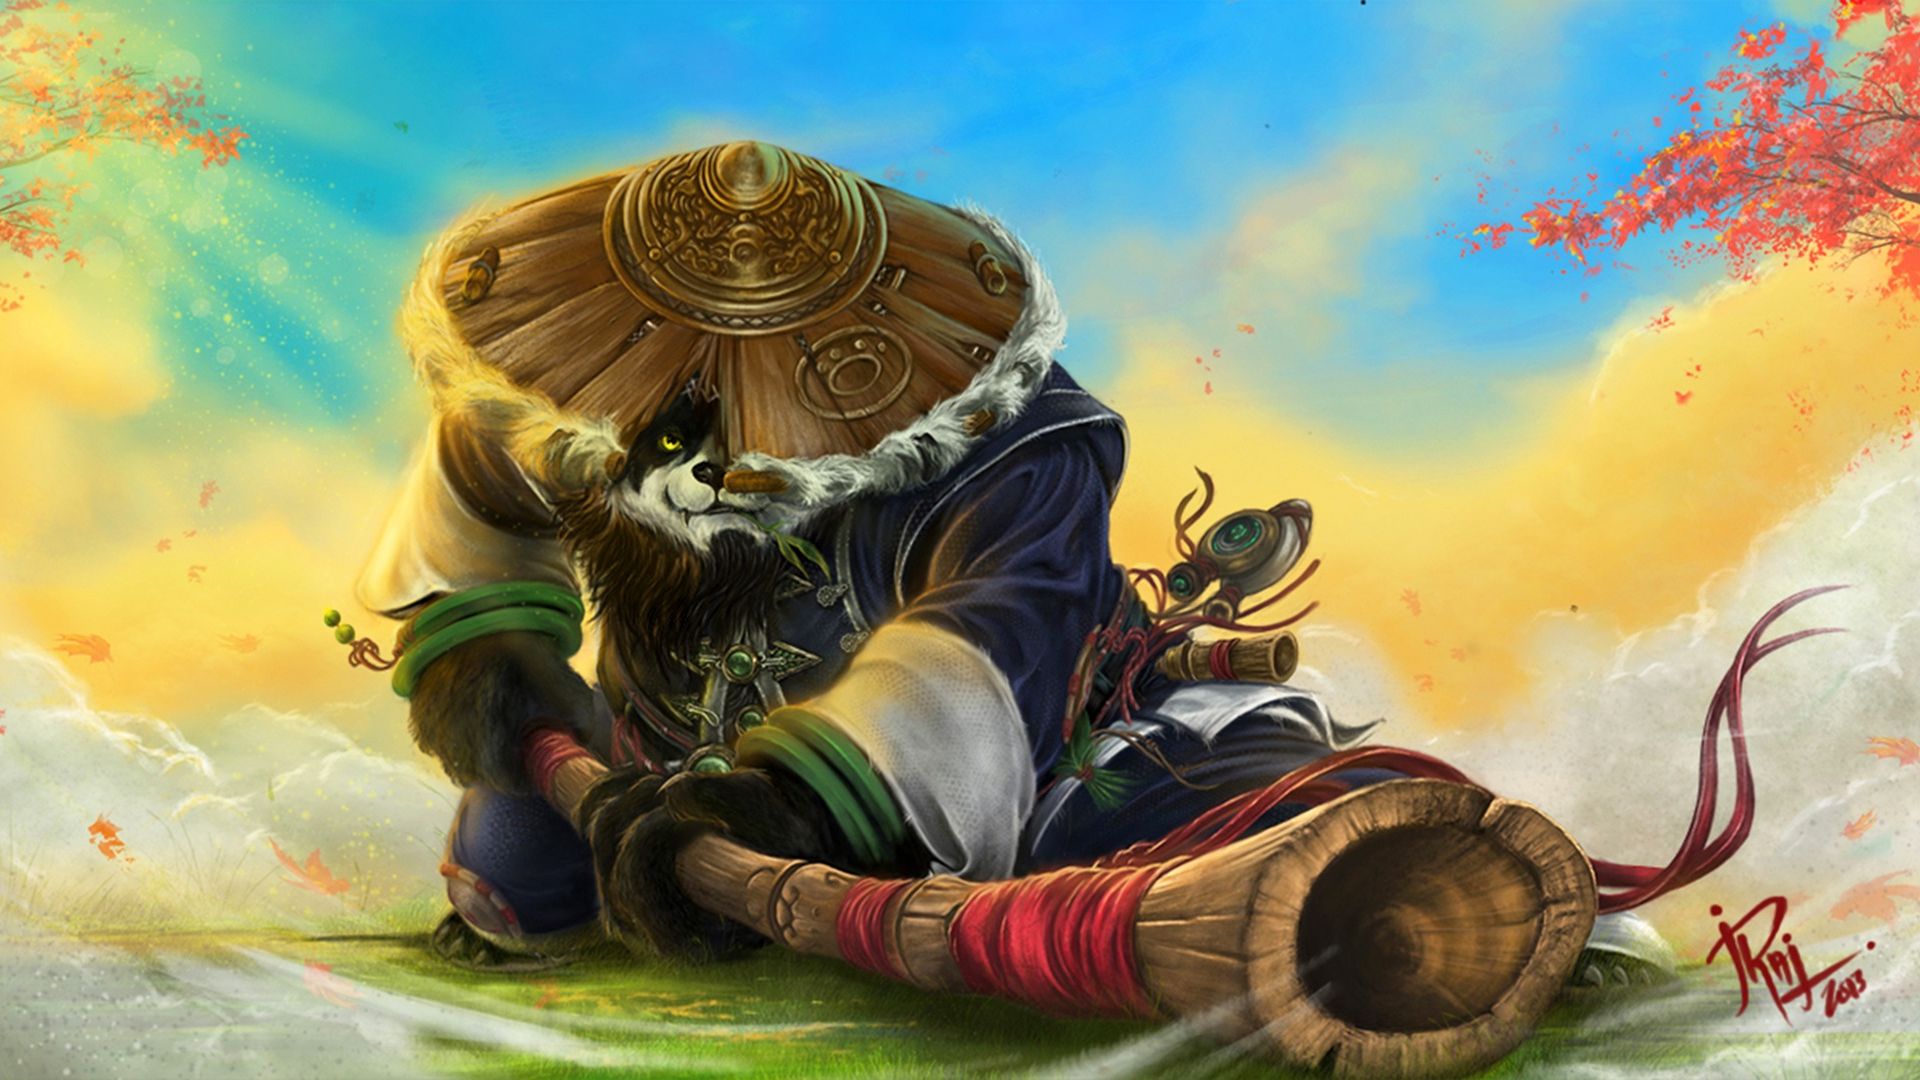 Wallpaper World of Warcraft: Mists of Pandaria online game, panda warrior